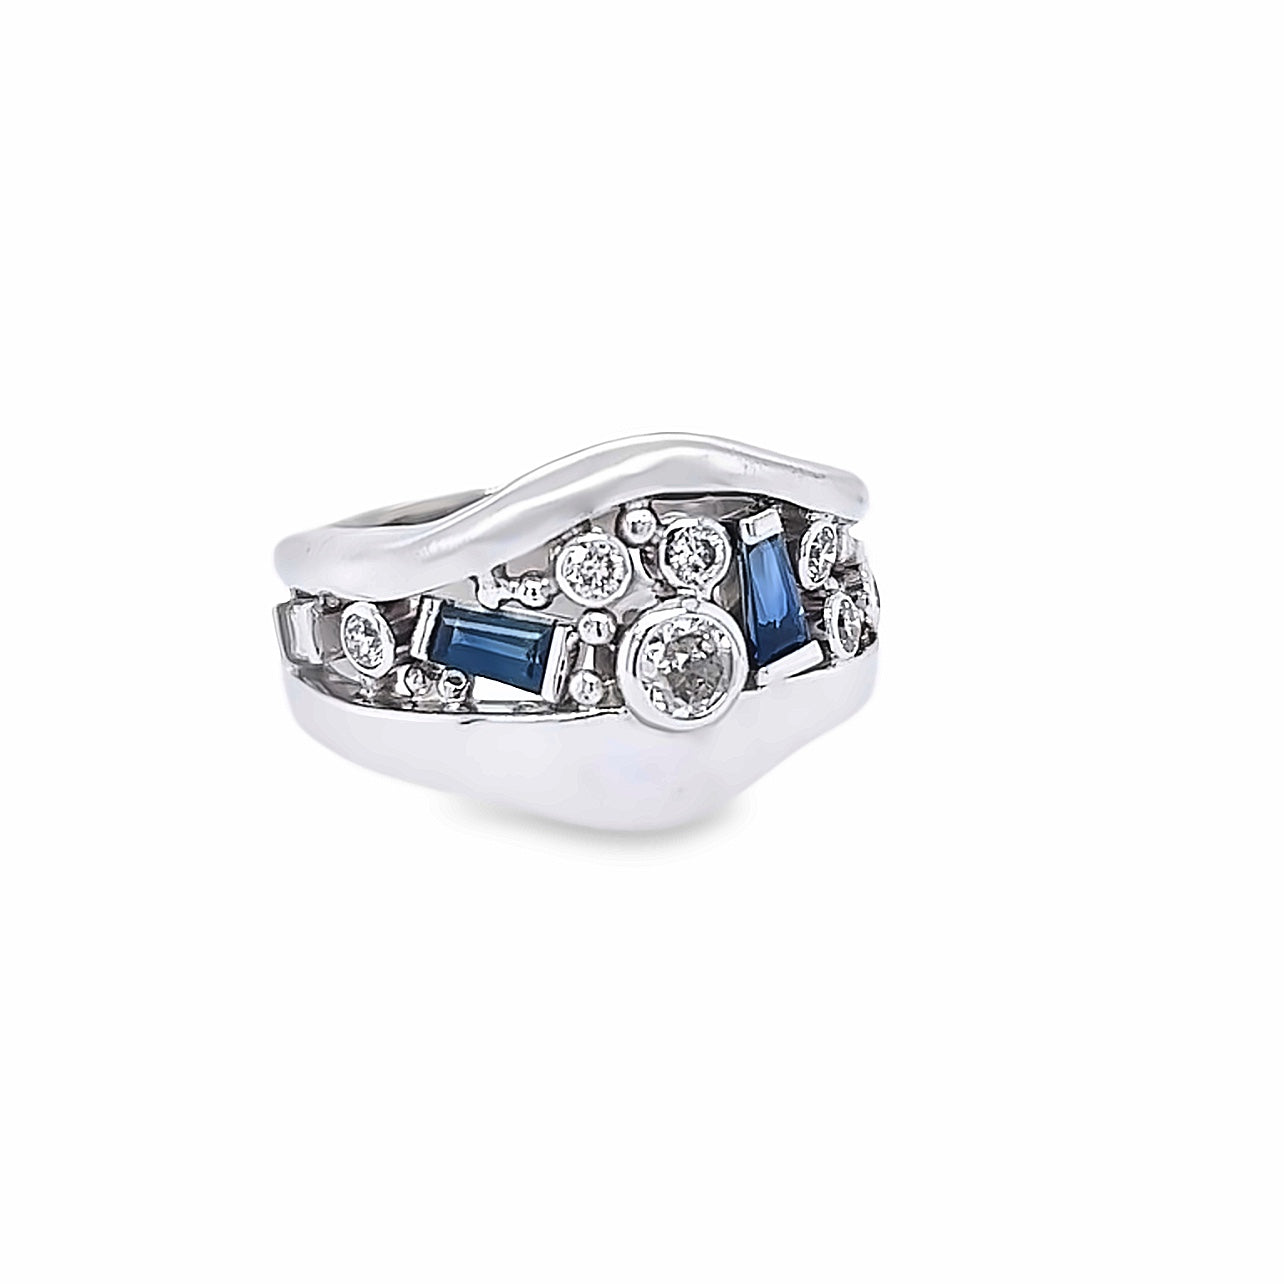 Custom 14k White Gold Diamond and Sapphire River Ring by Paul Richter